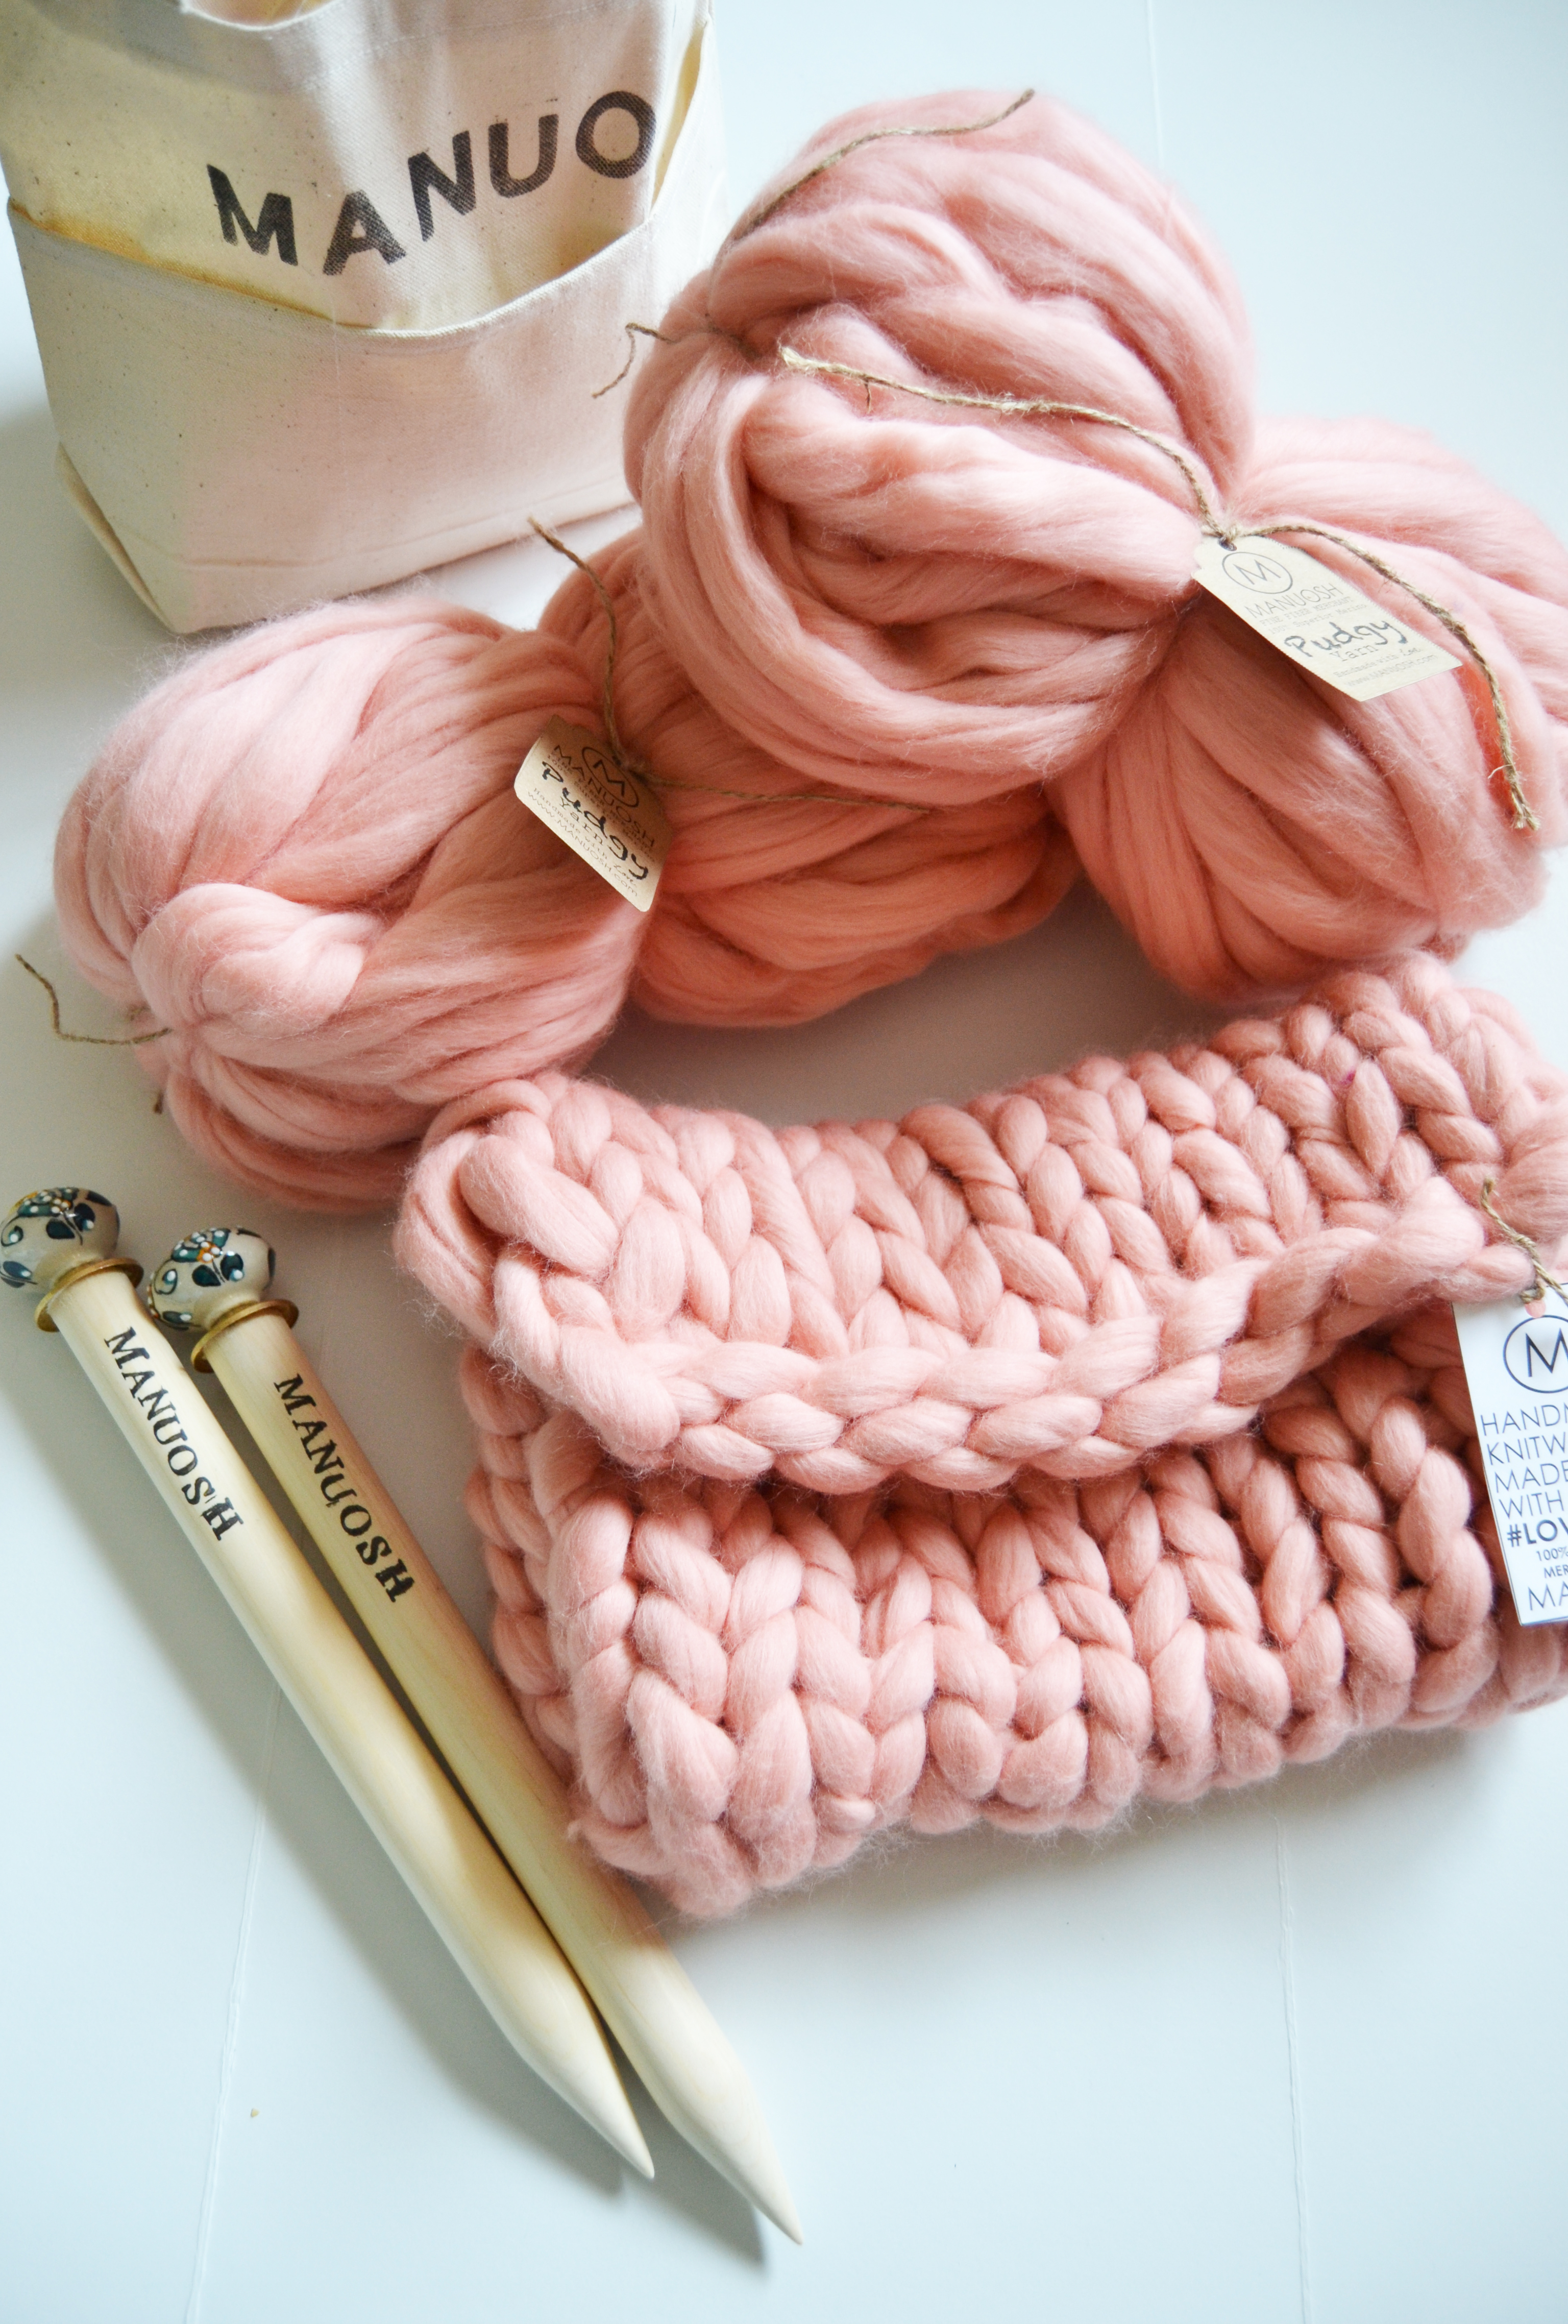 Merino Wool Chunky Yarn